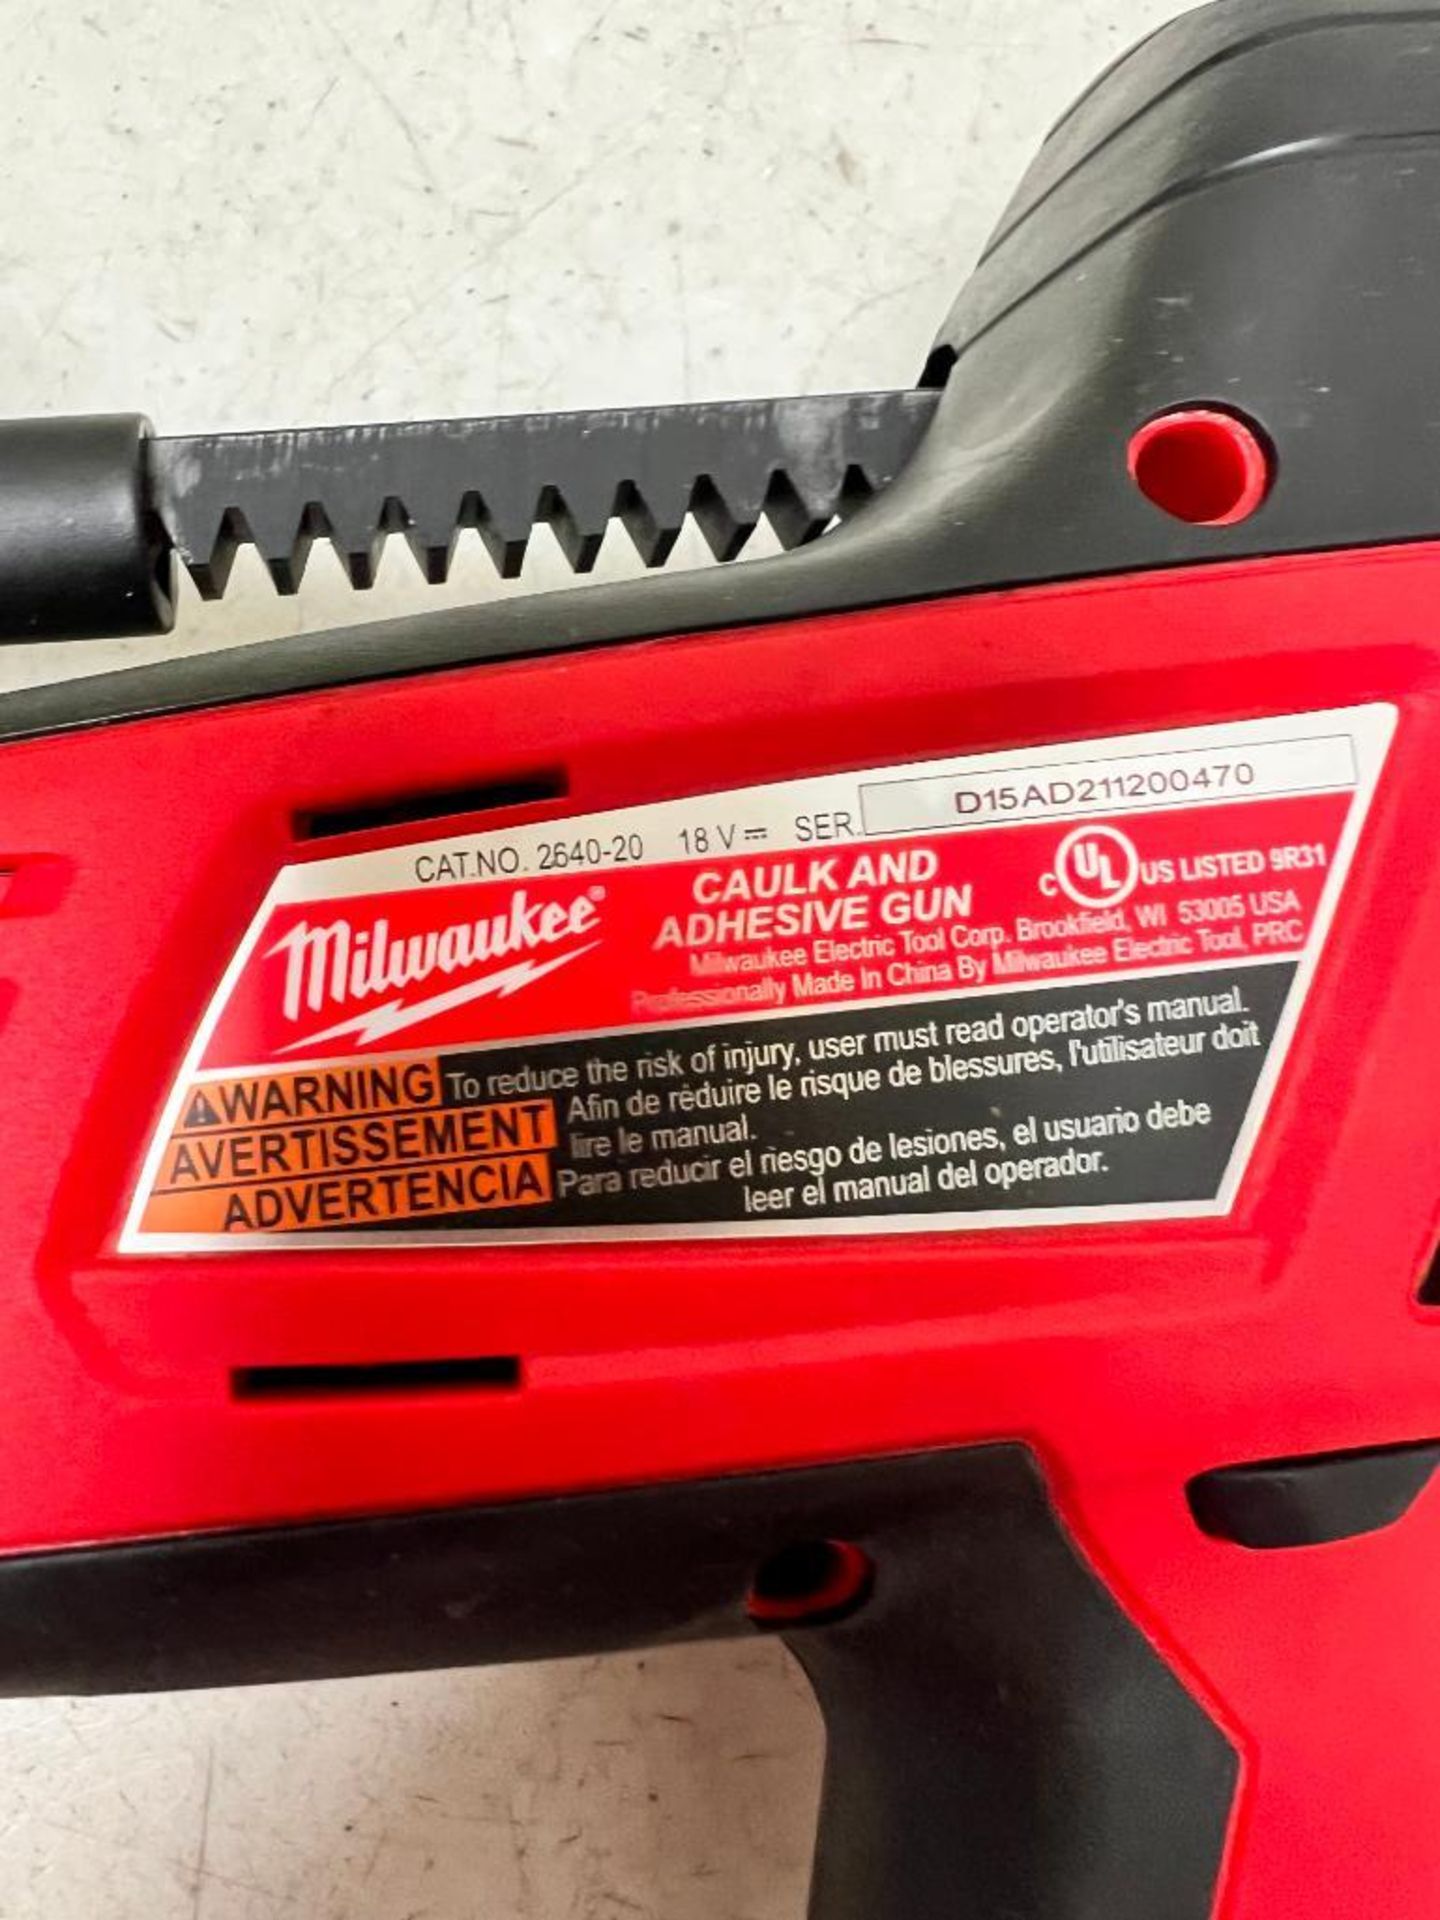 Milwaukee 18 Volt Cordless Caulk & Adhesive Gun, S/N D15AD211200470, w/ Charger (No Battery) - Image 4 of 5